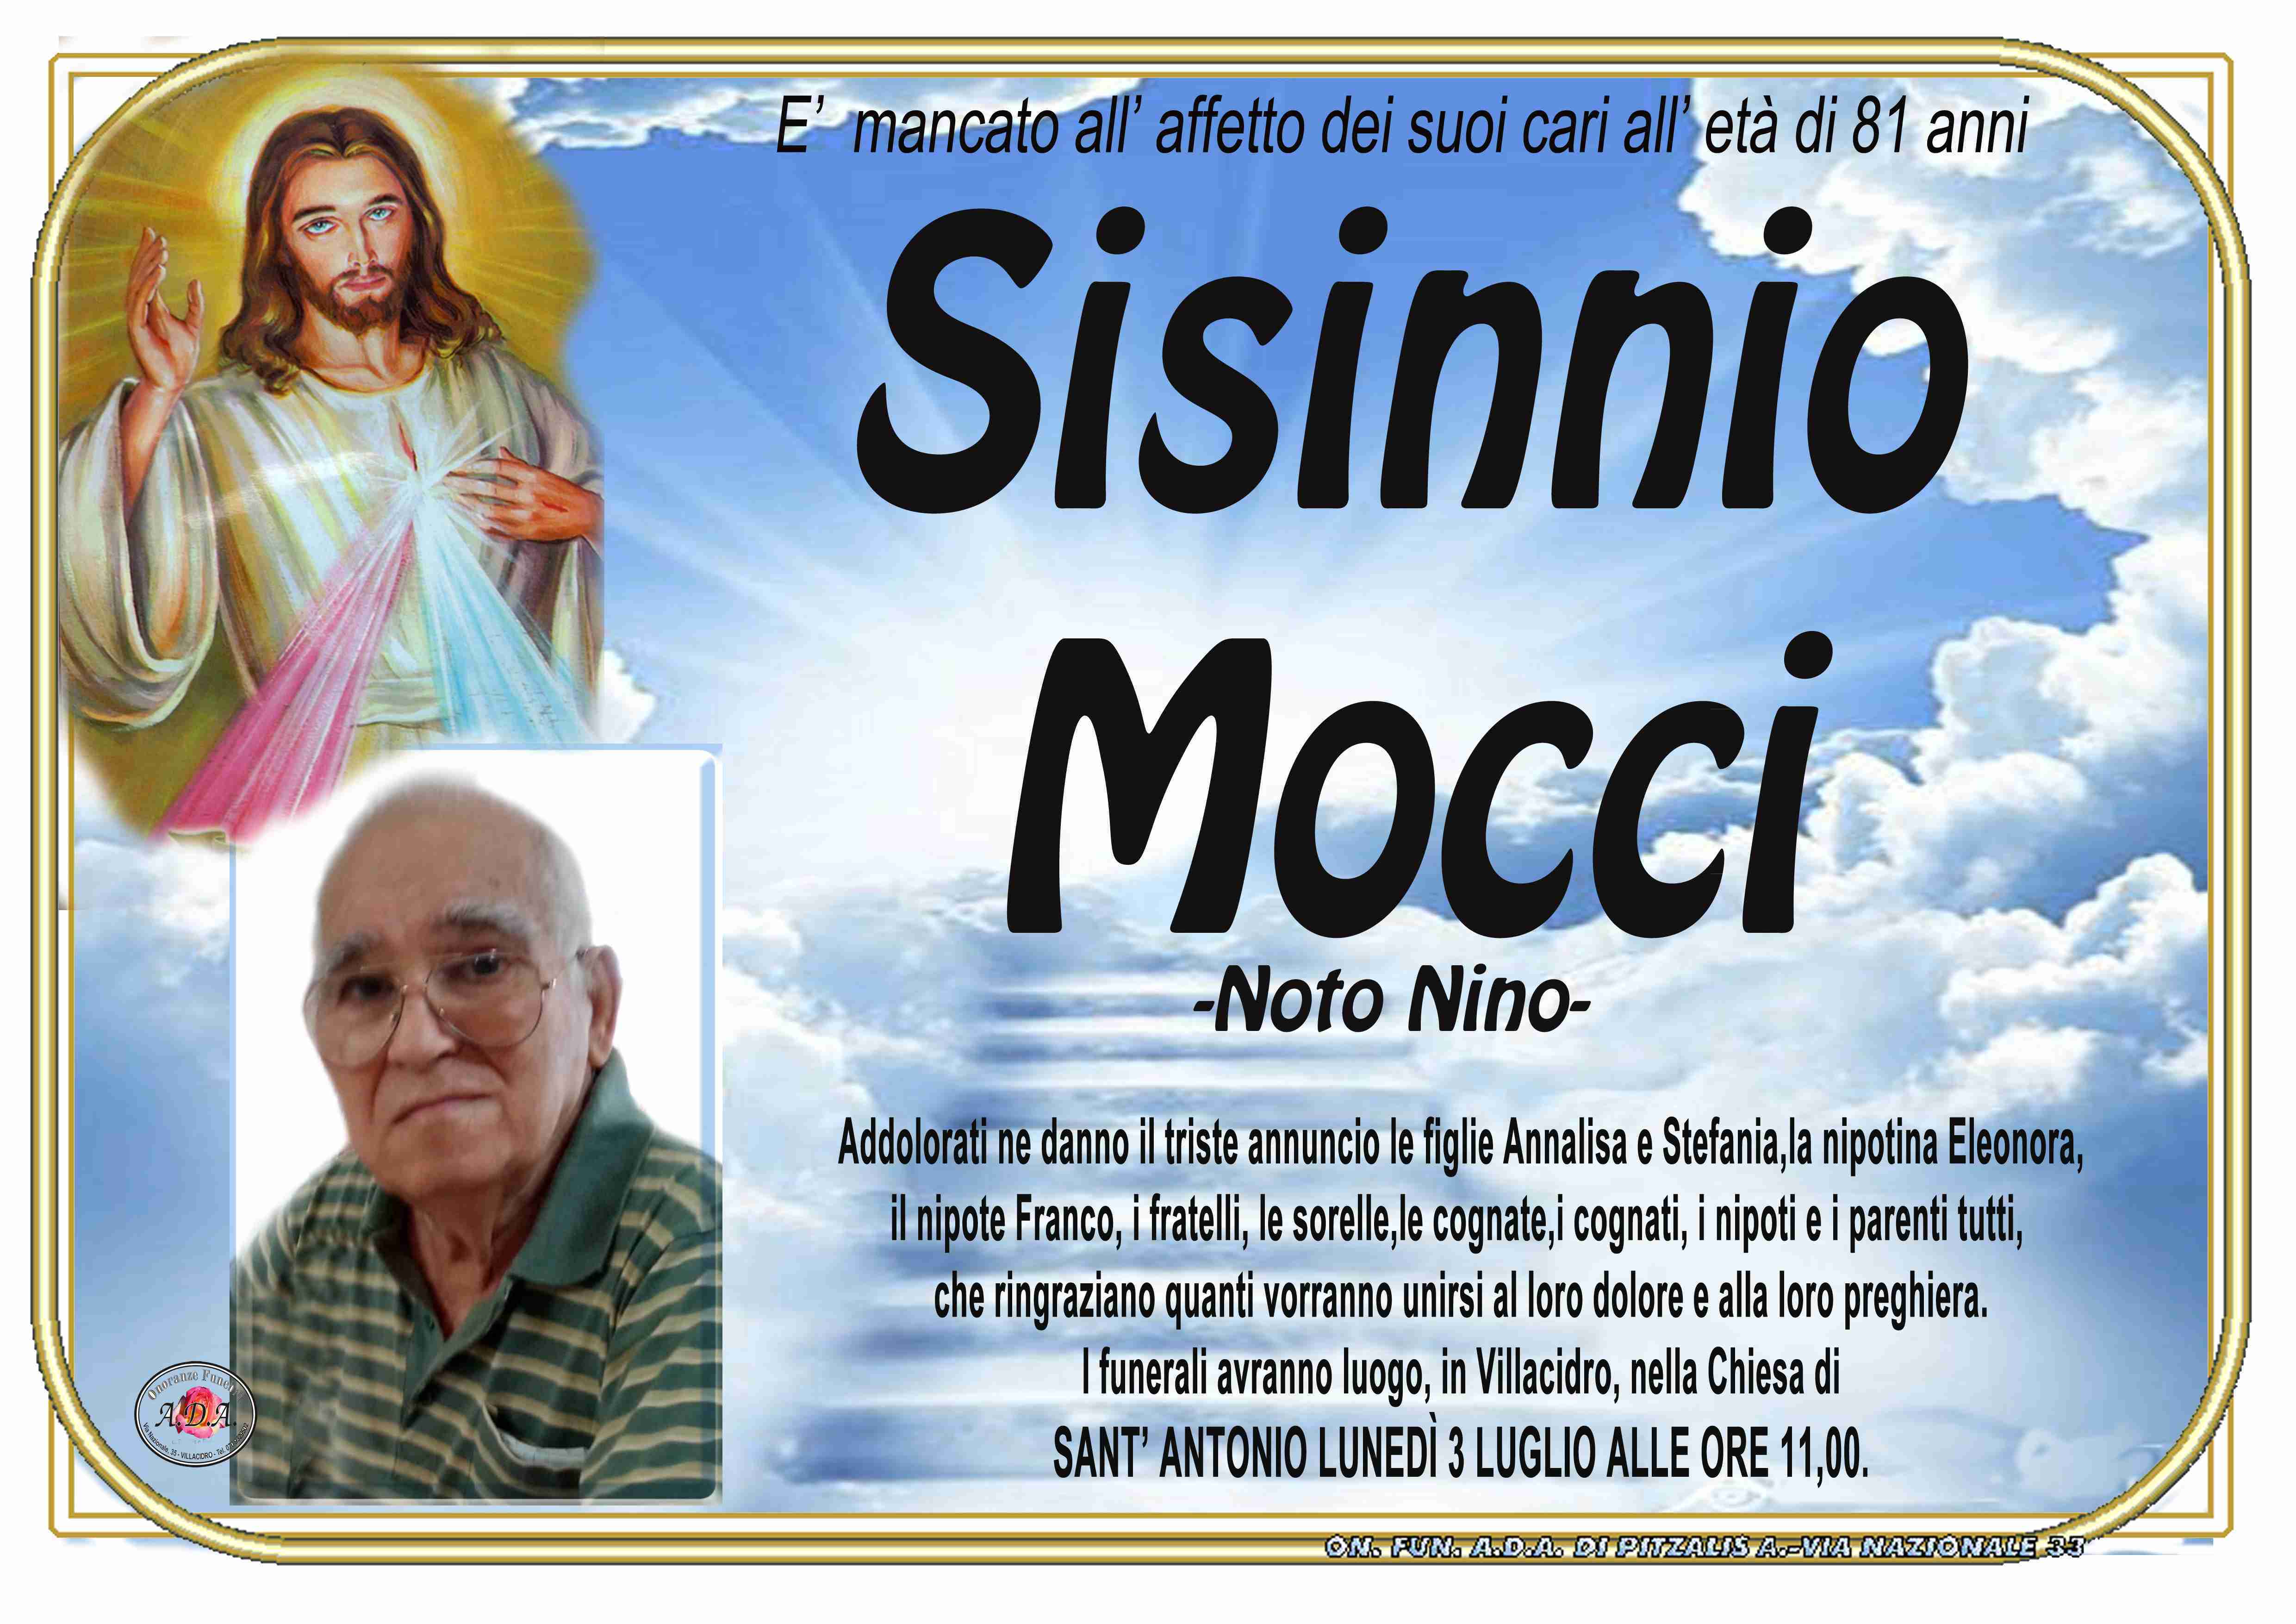 Sisinnio Mocci